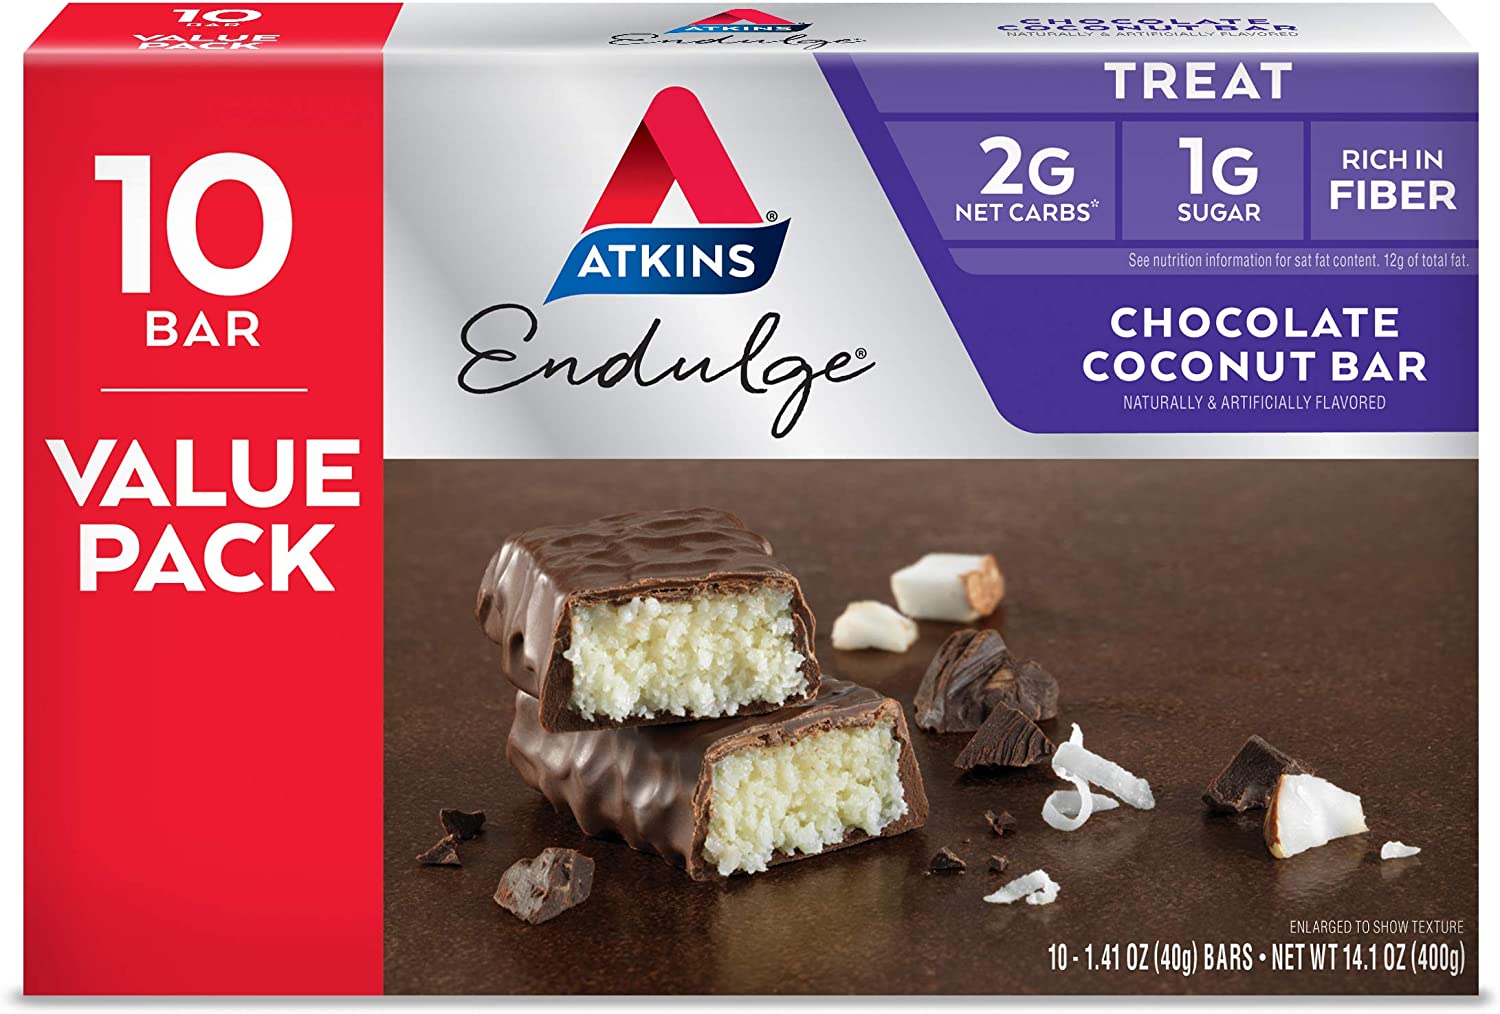 Atkins Endulge Treat Chocolate Coconut Bar Value Pack (10 Bars) $8.75